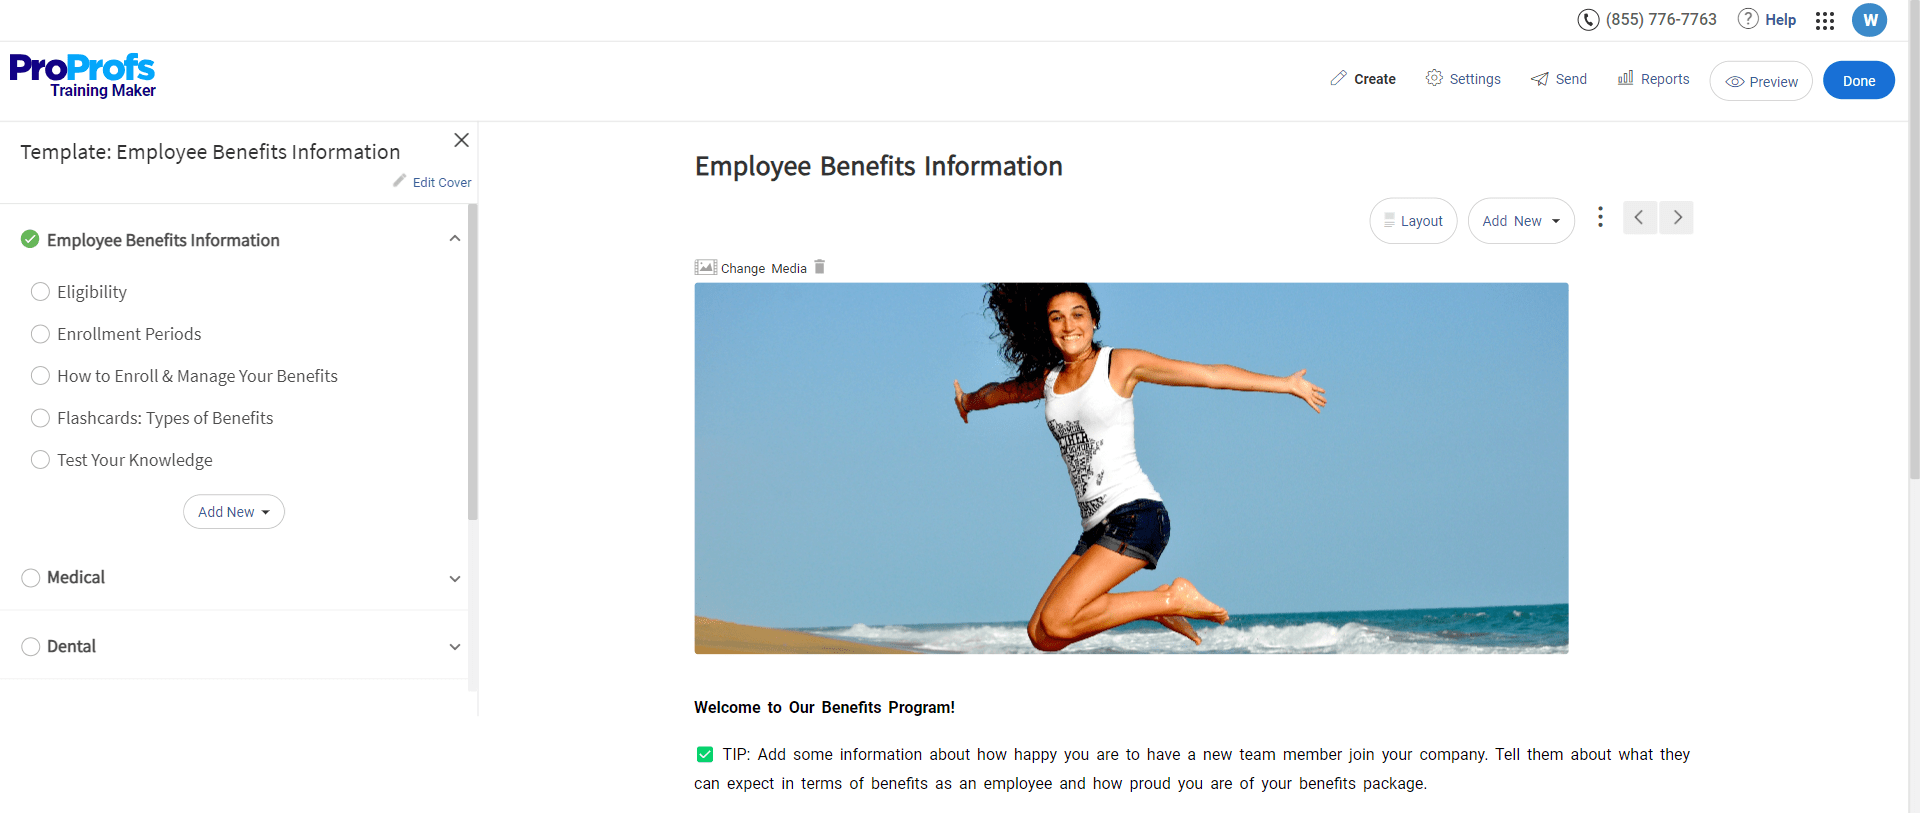 Employee Benefits Information 